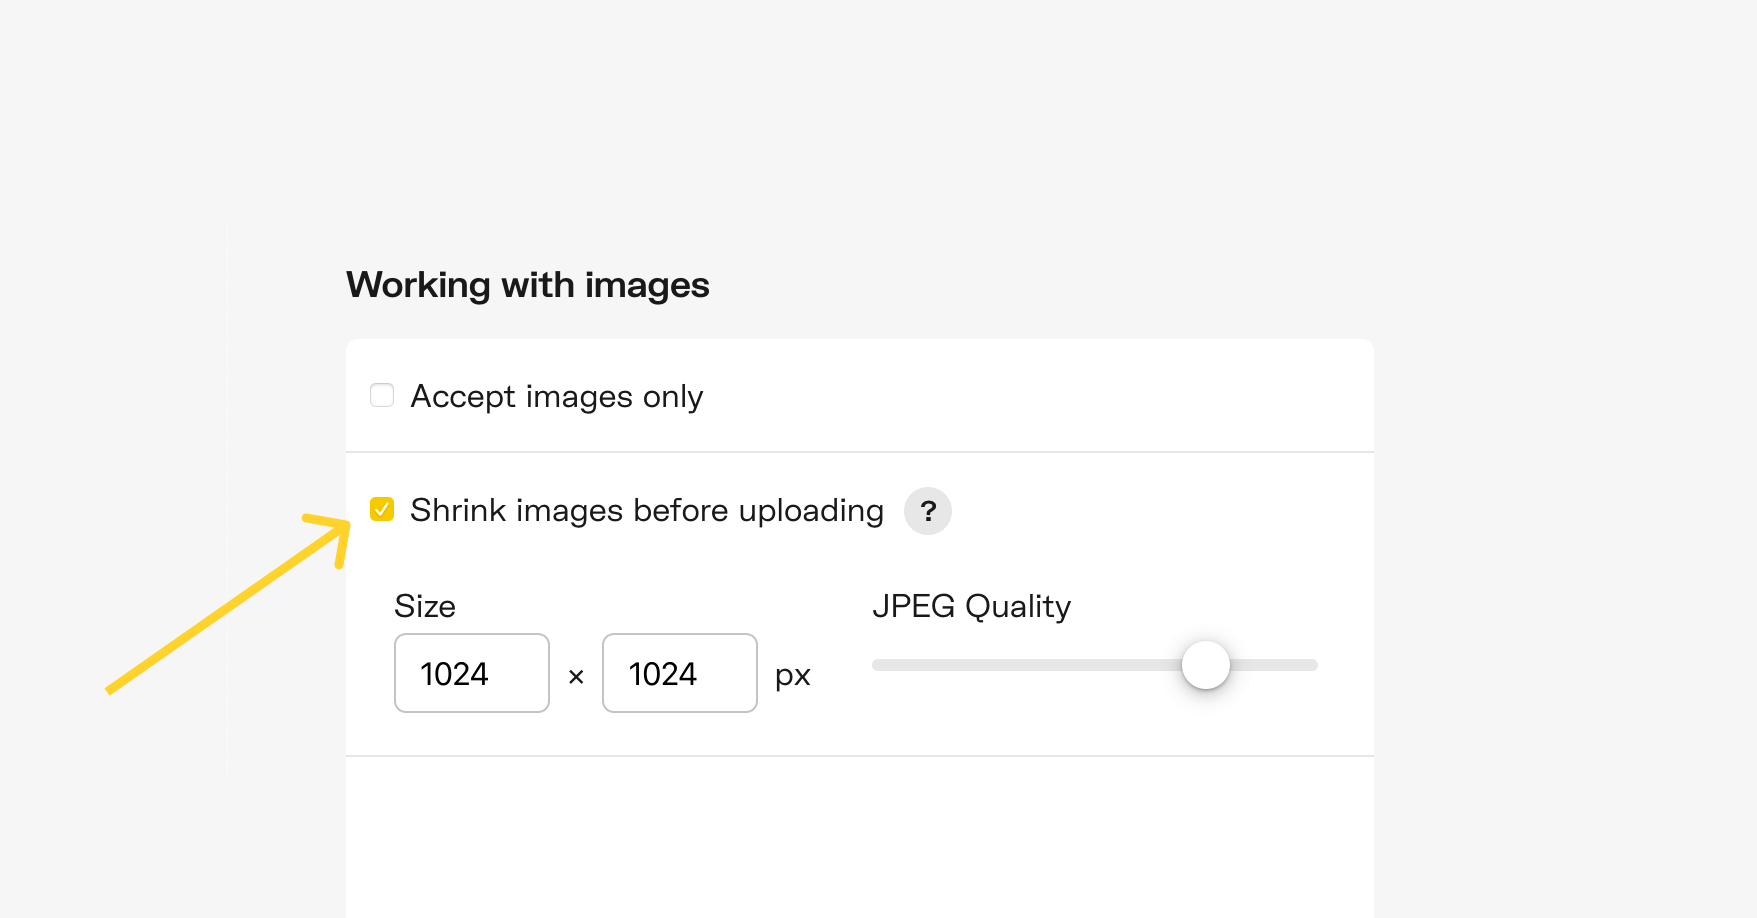 Shrink images before uploading